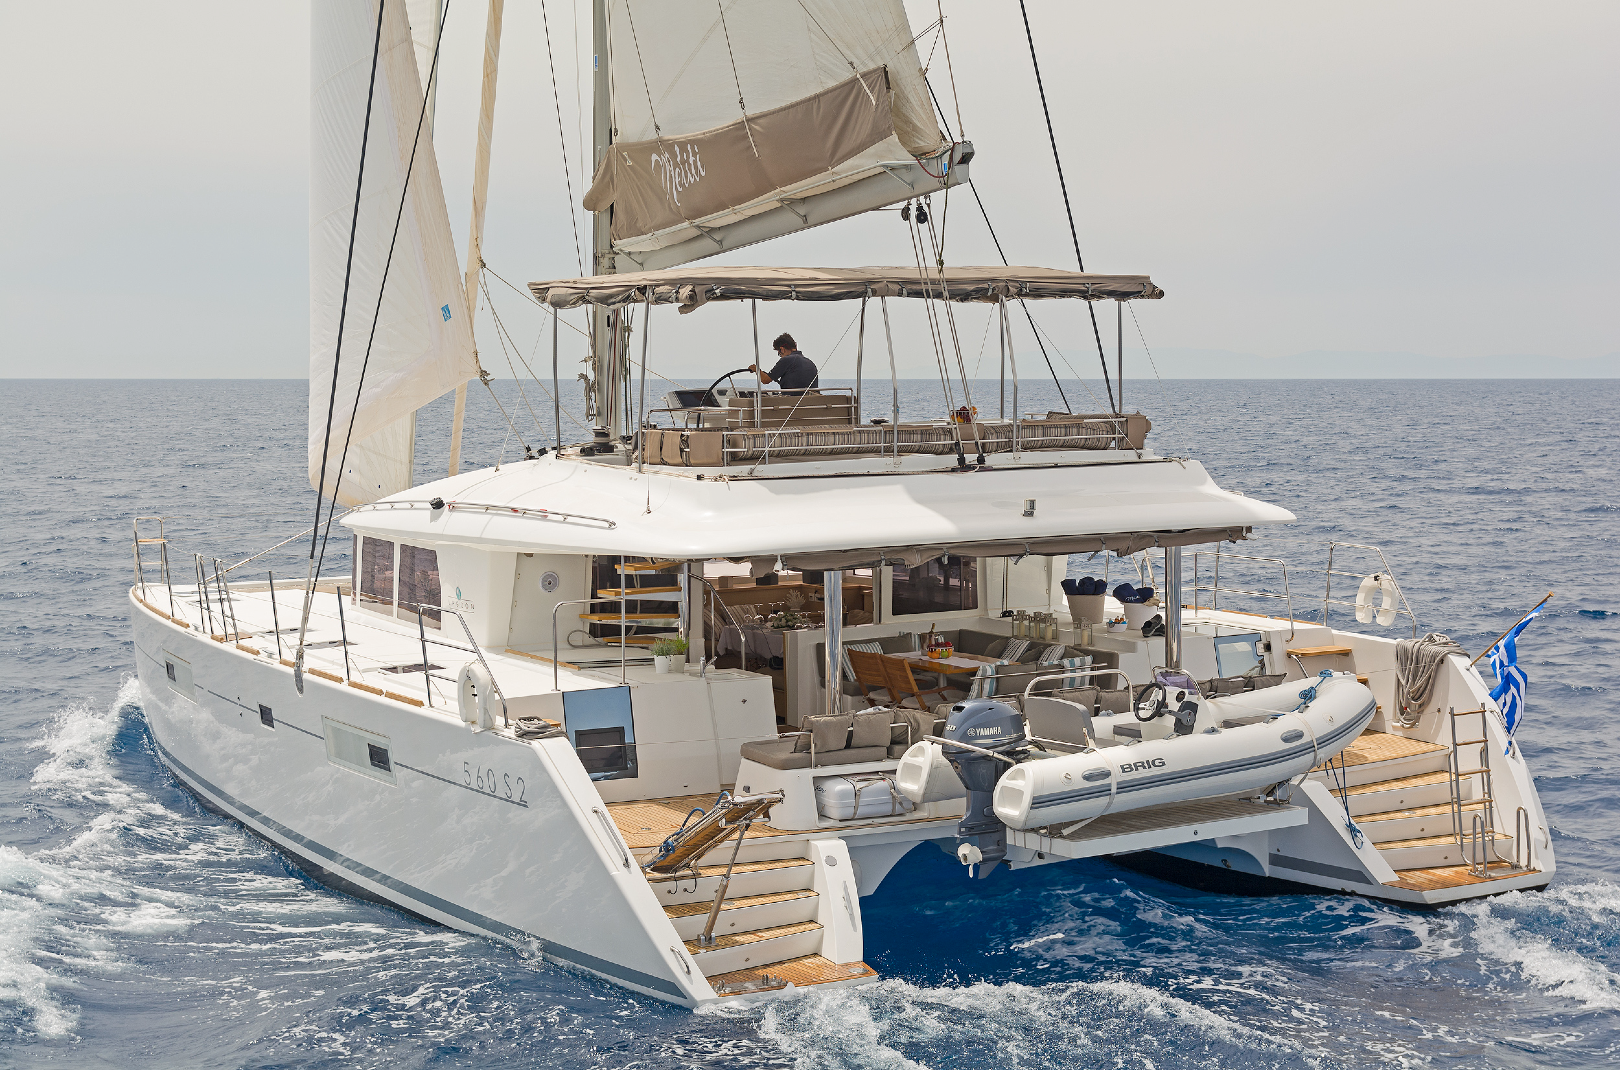 luxury-sailing-catamaran-Meliti-full-view